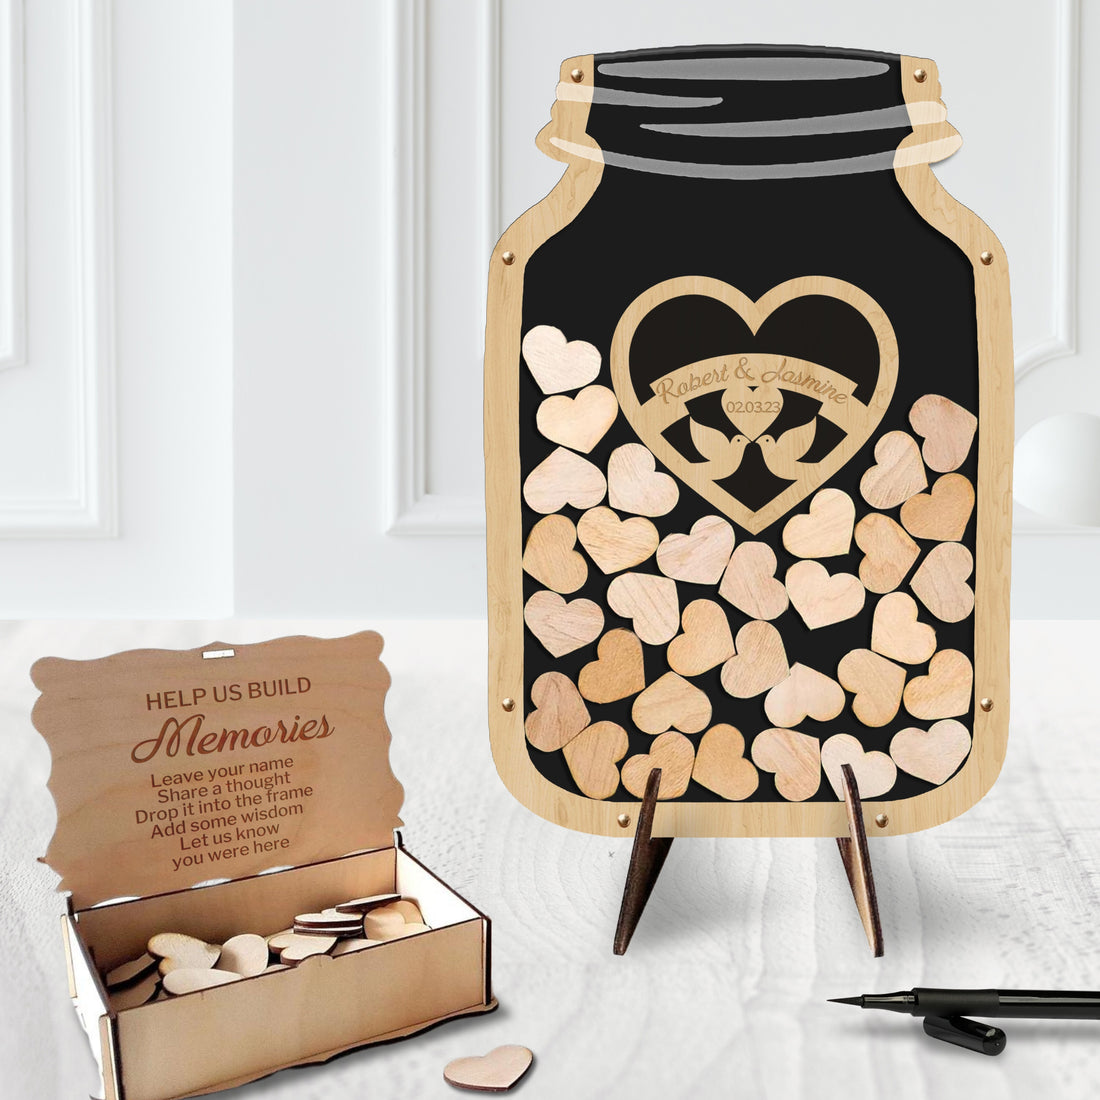 Custom Made Laser Cut Plywood & Acrylic Jar Shape Wedding Heart Drop Box, Rustic Personalised Guest Book Alternative, Stationery Table Decor